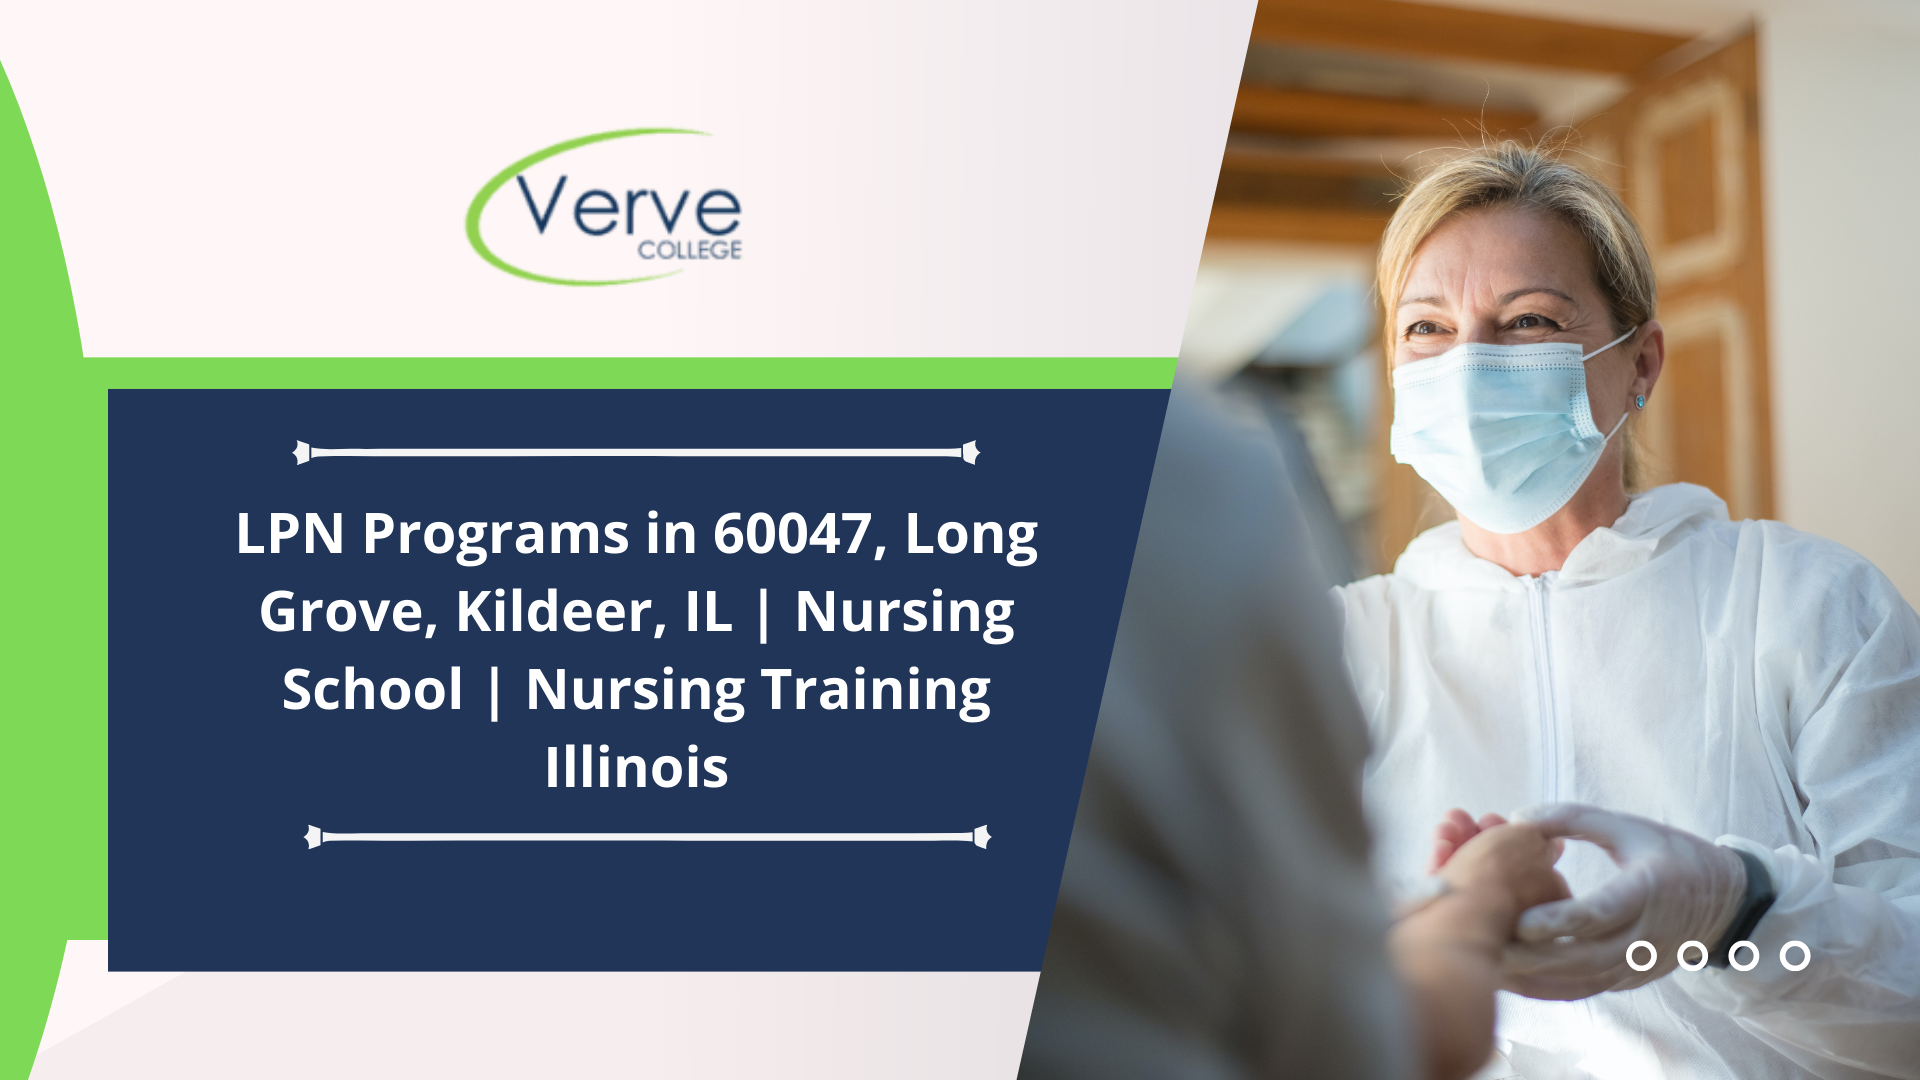 LPN Programs in 60047, Long Grove, Kildeer, IL | Nursing School | Nursing Training Illinois